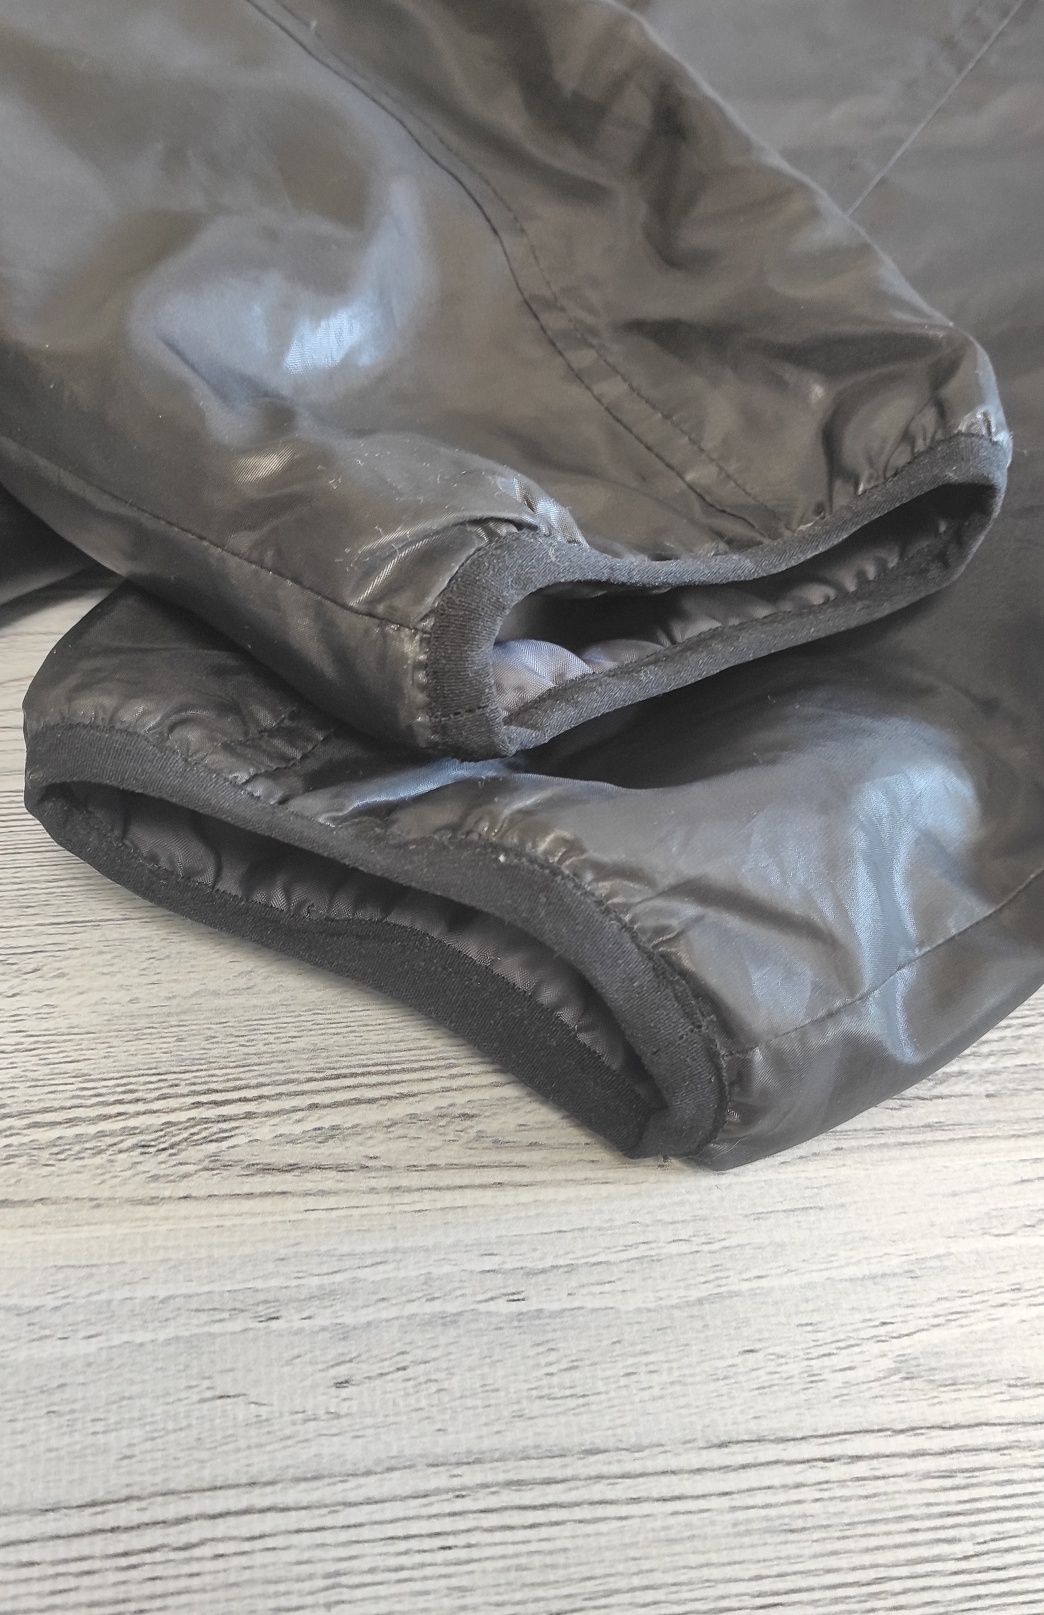 Куртка ветровка Converse, оригинал, размер M